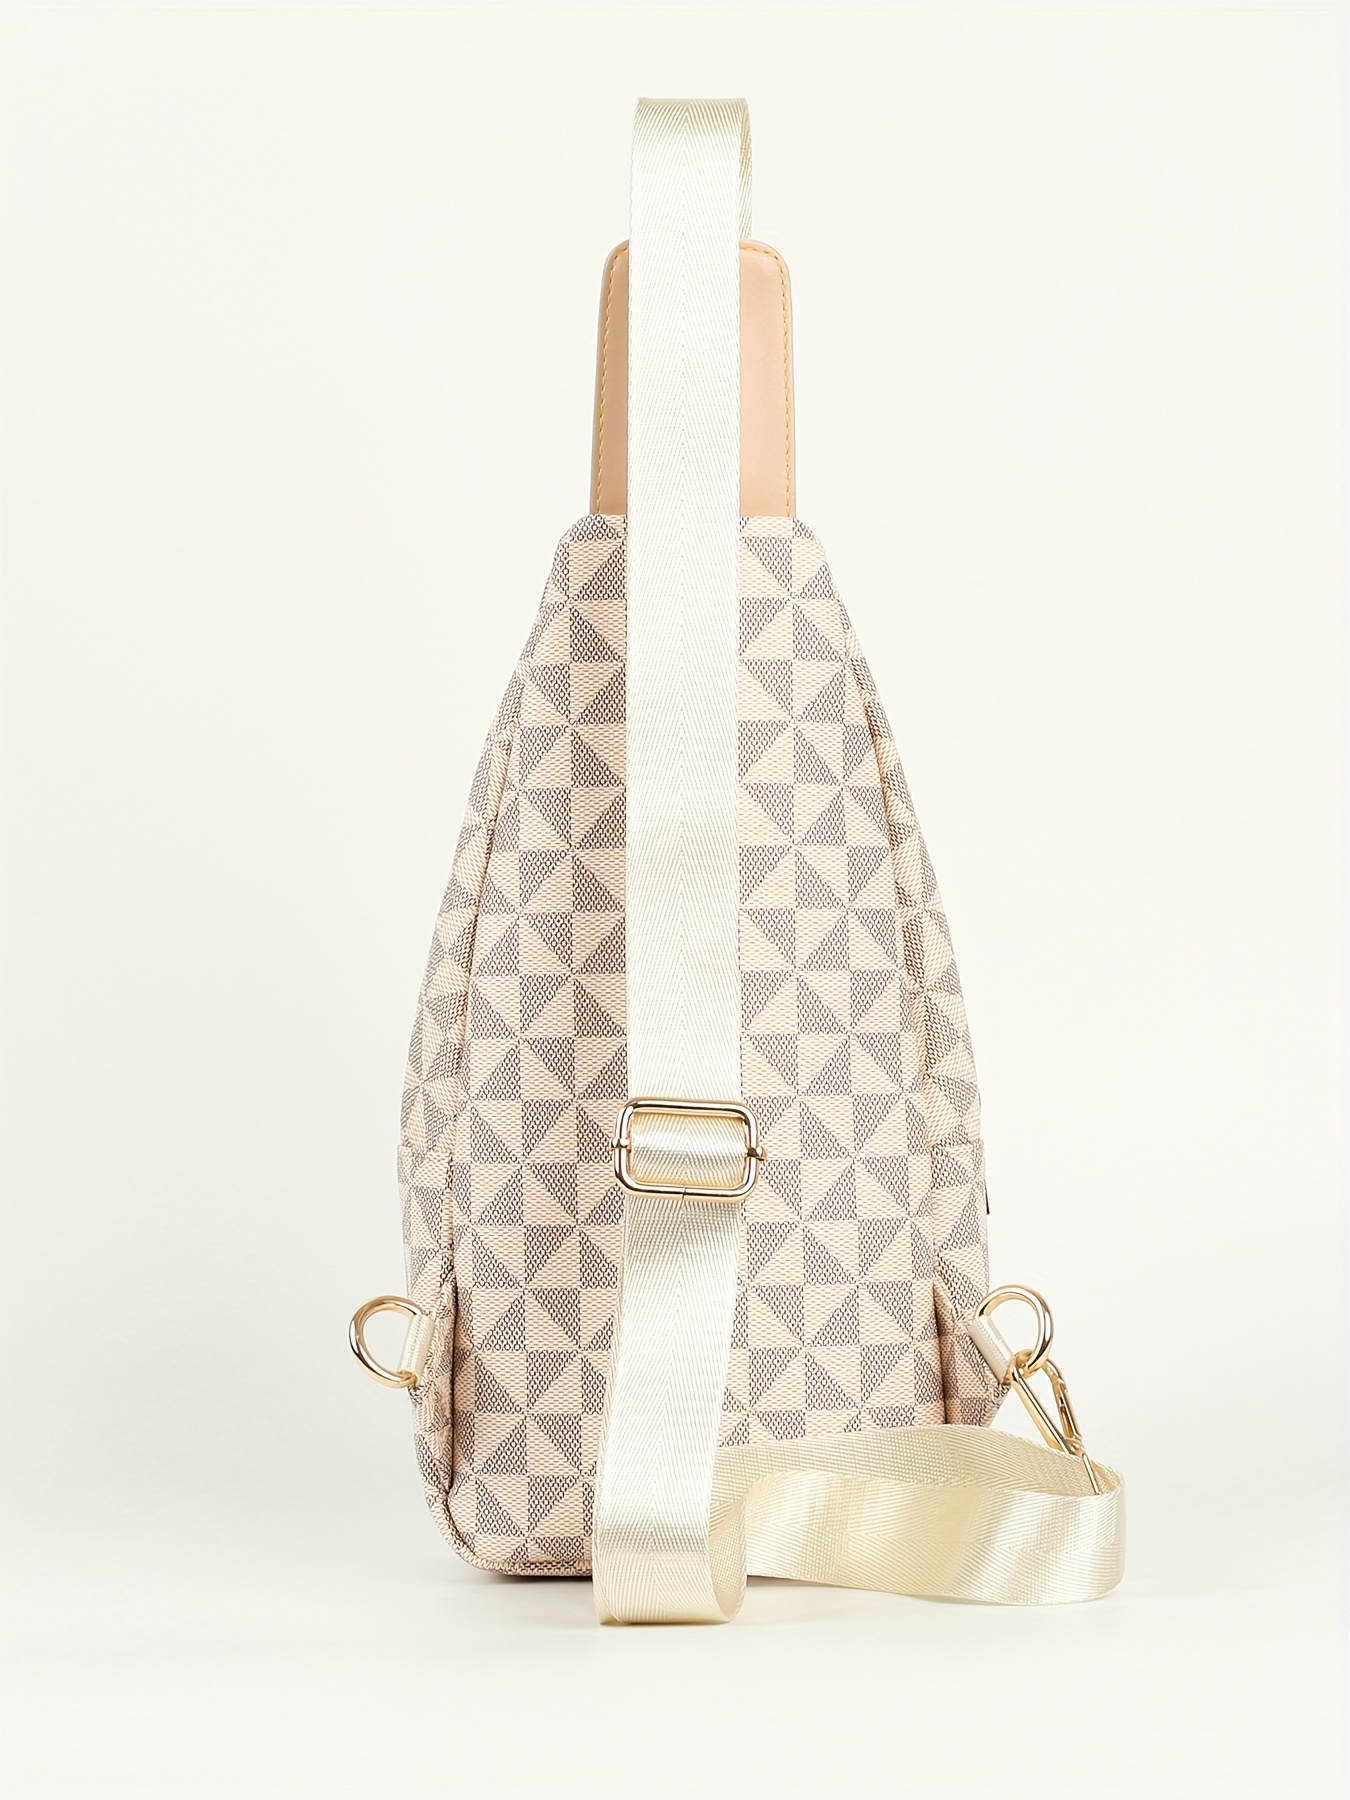 Geometric Pattern Sling Bag, Multi Zipper Crossbody Bag, Casual Chest Bag  For Outdoor Travel Sports - Temu